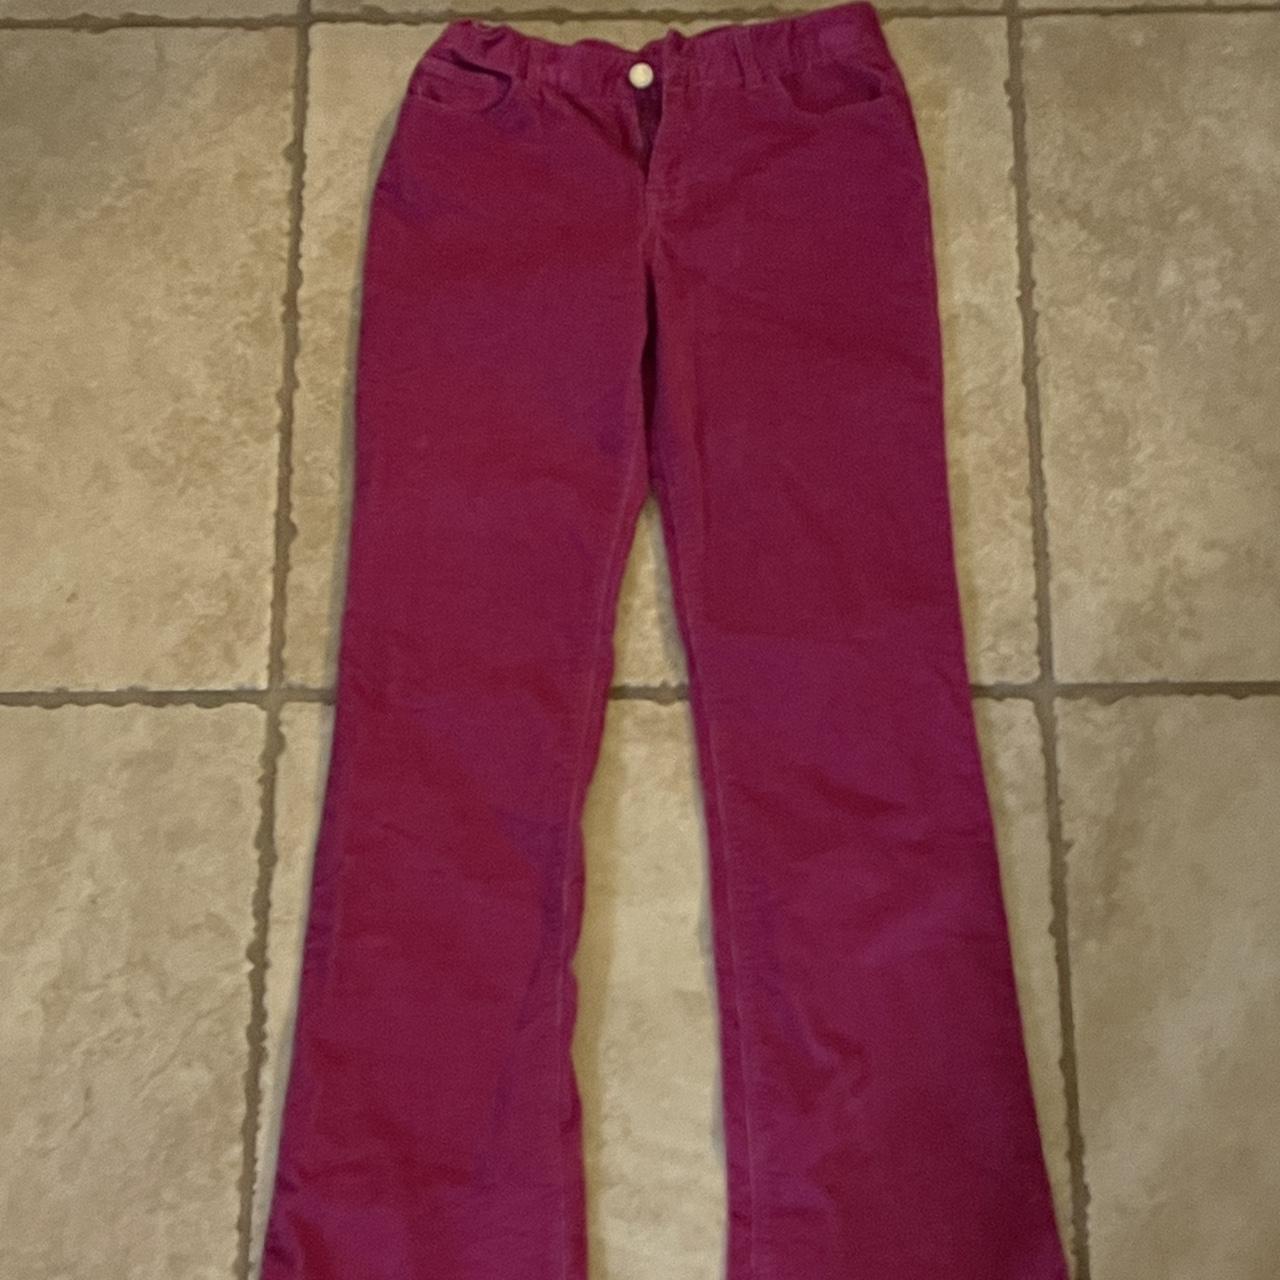 Gap Kids 16 Corduroy Fuchsia Pants (Adjustable Waist) - Depop